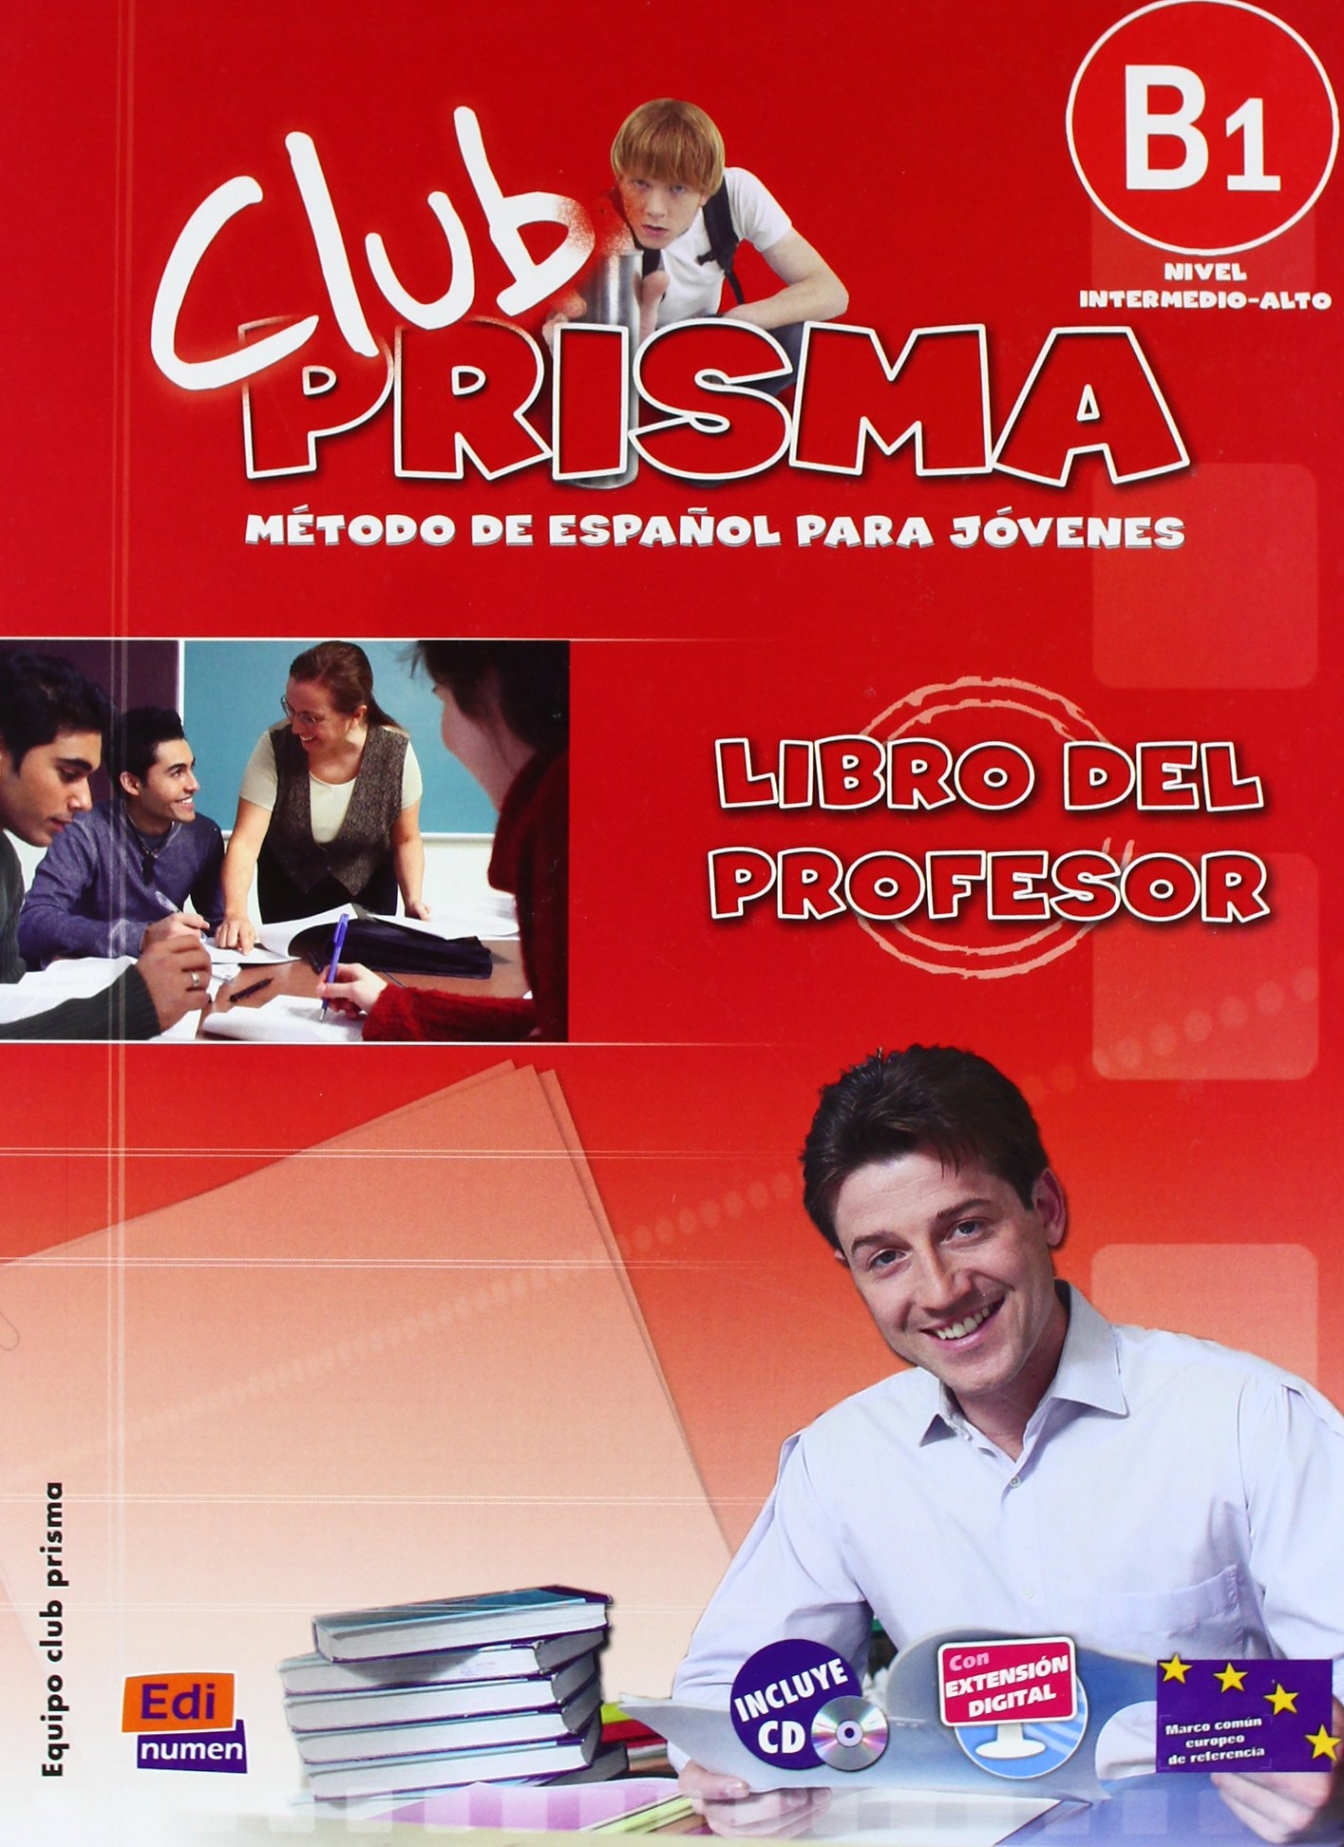 Координатор проекта: Maria Jose Gelabert Club Prisma Nivel B1 - Libro del profesor + CD de audiciones 